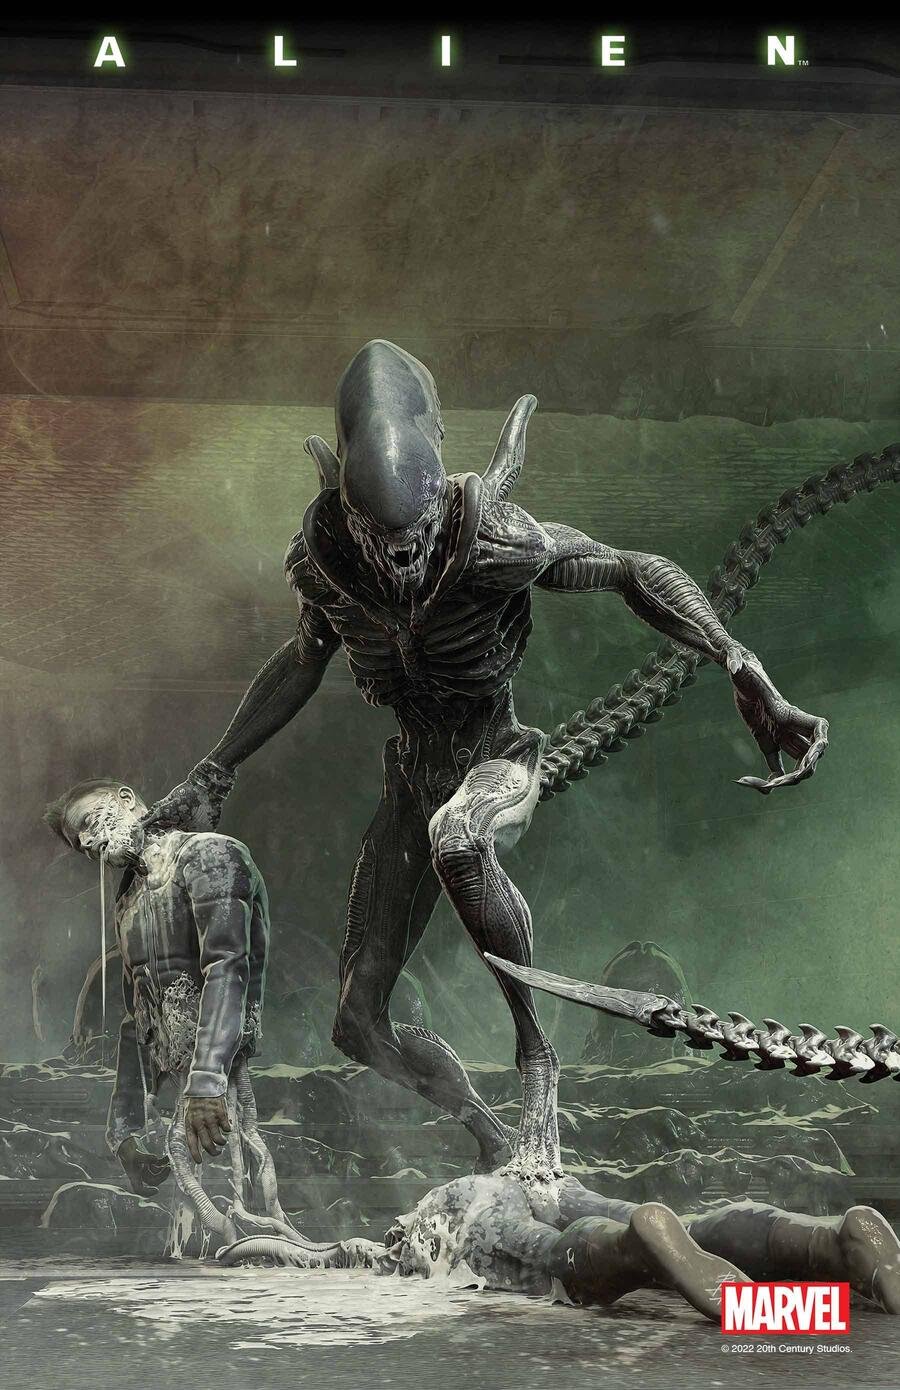 Cover di Alien 1 di Björn Barends, la seconda serie targata Marvel